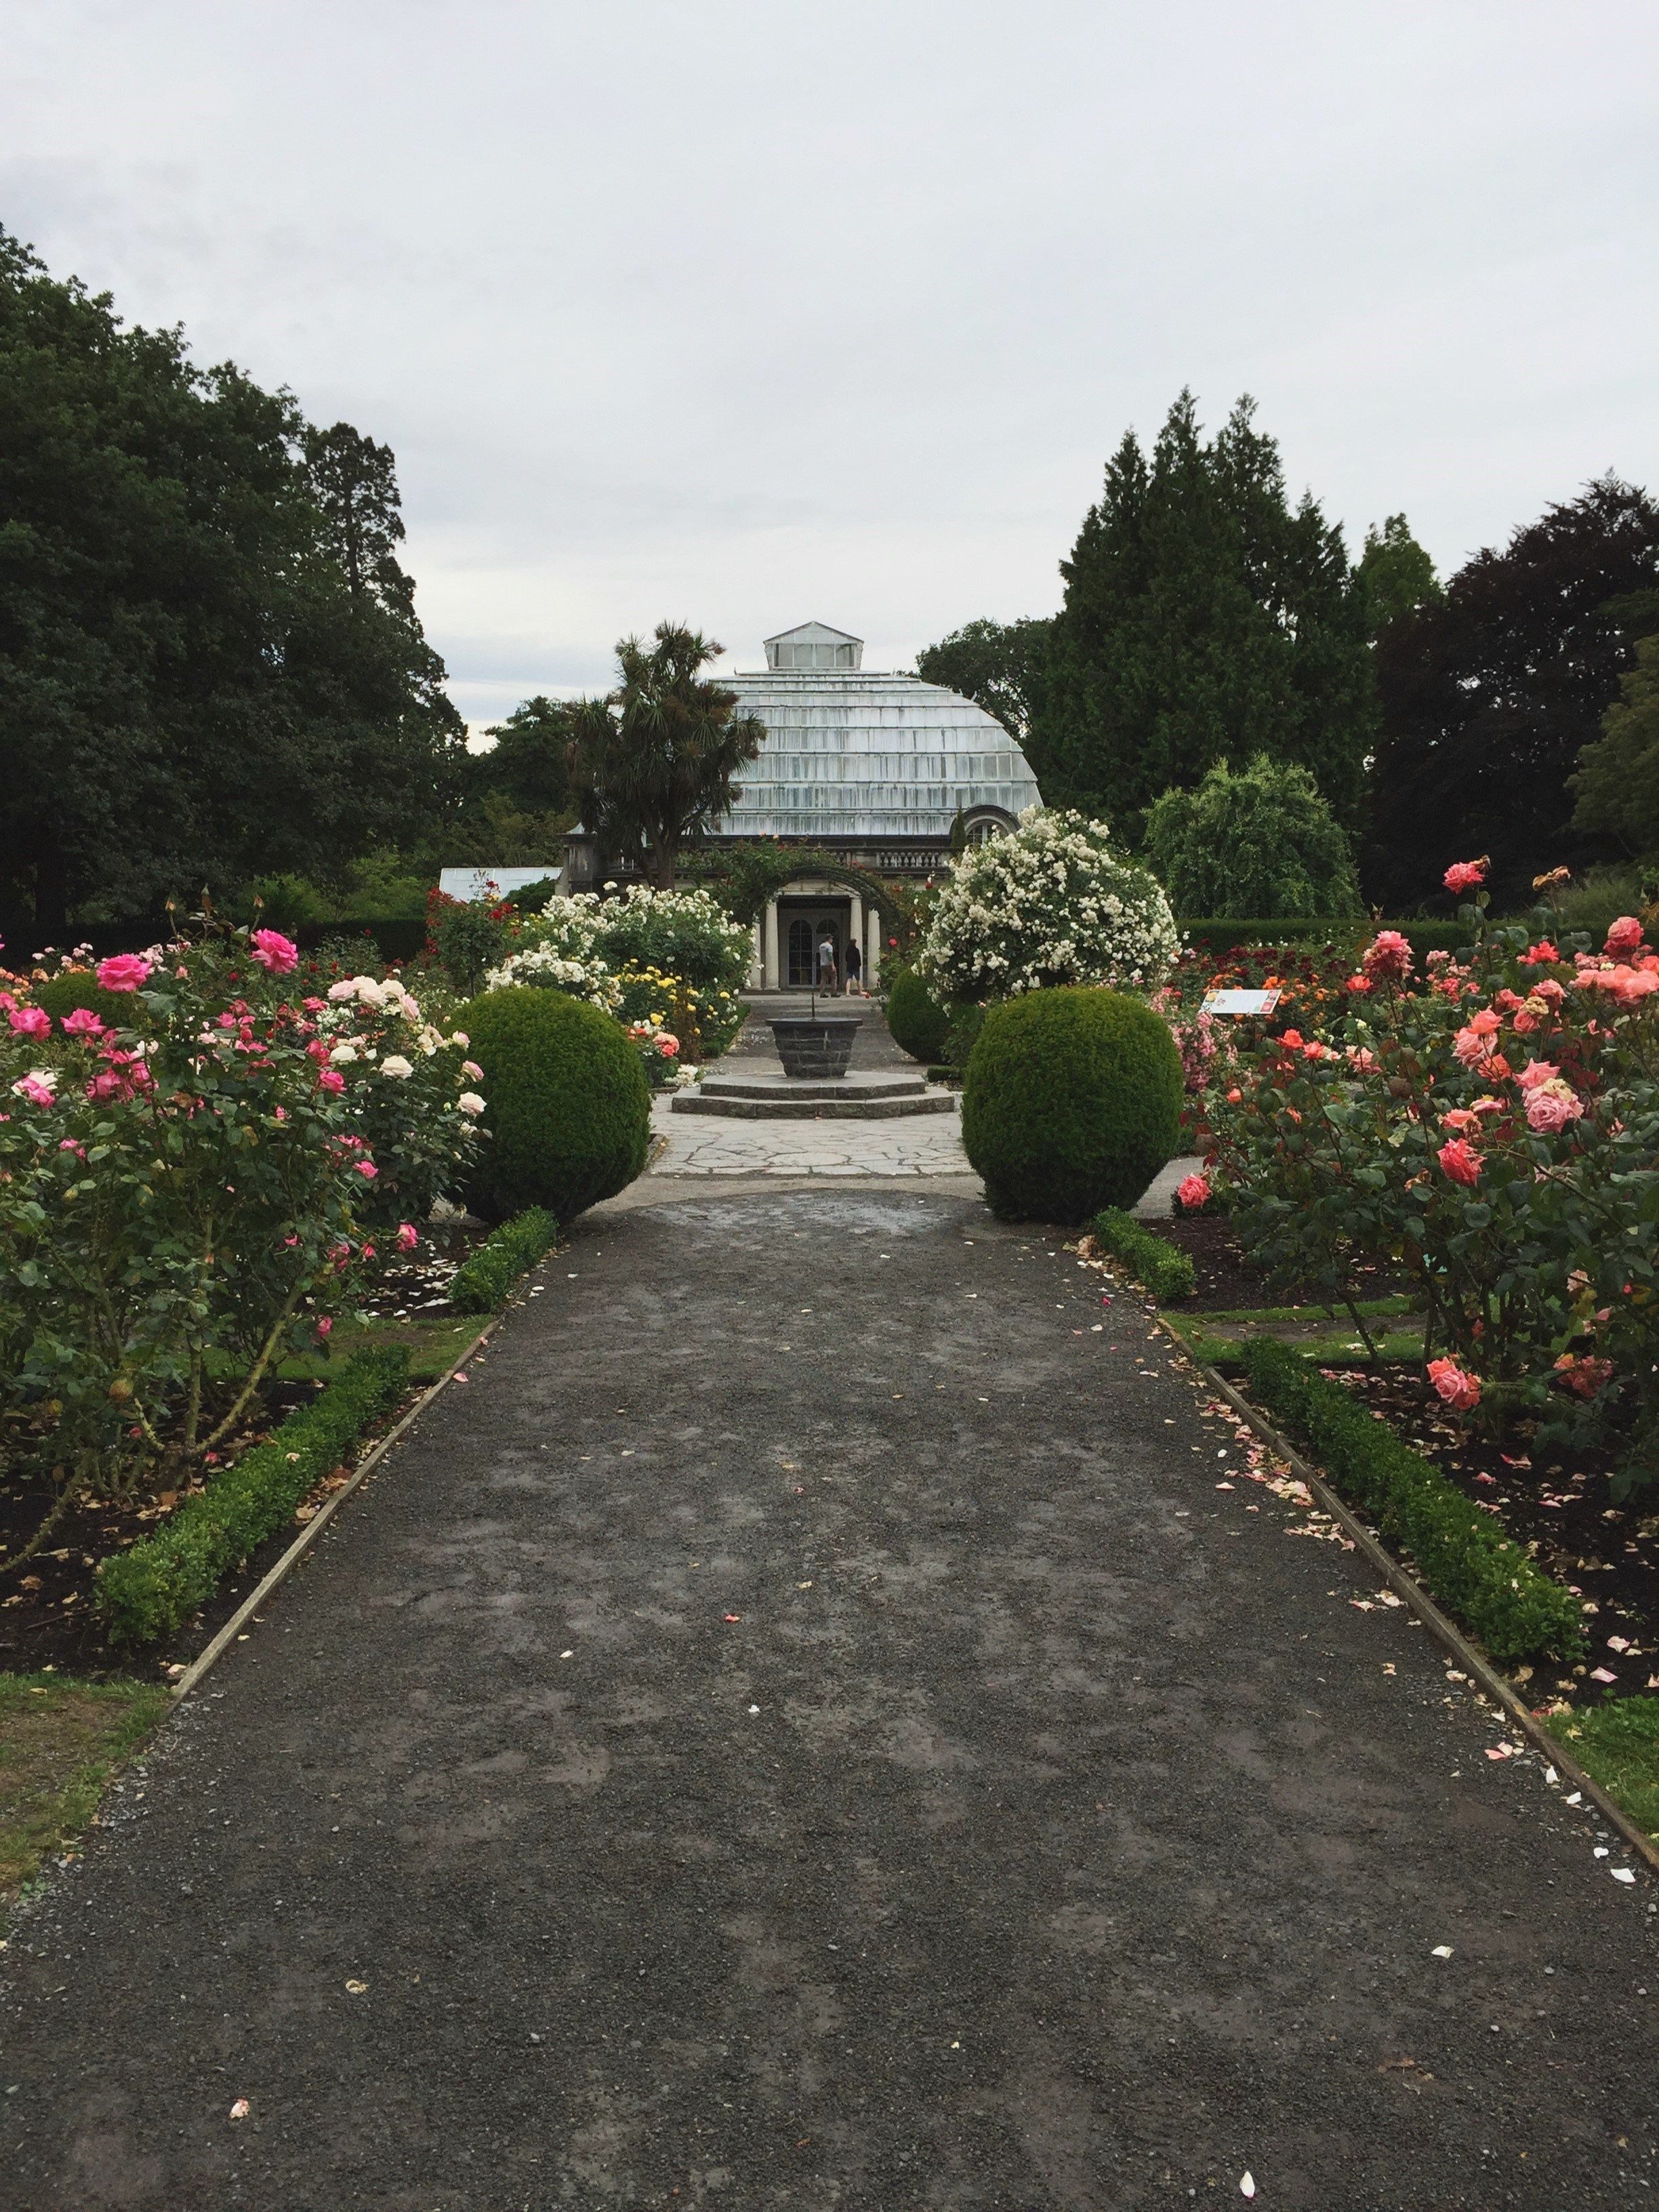 Christchurch Botanic Gardens